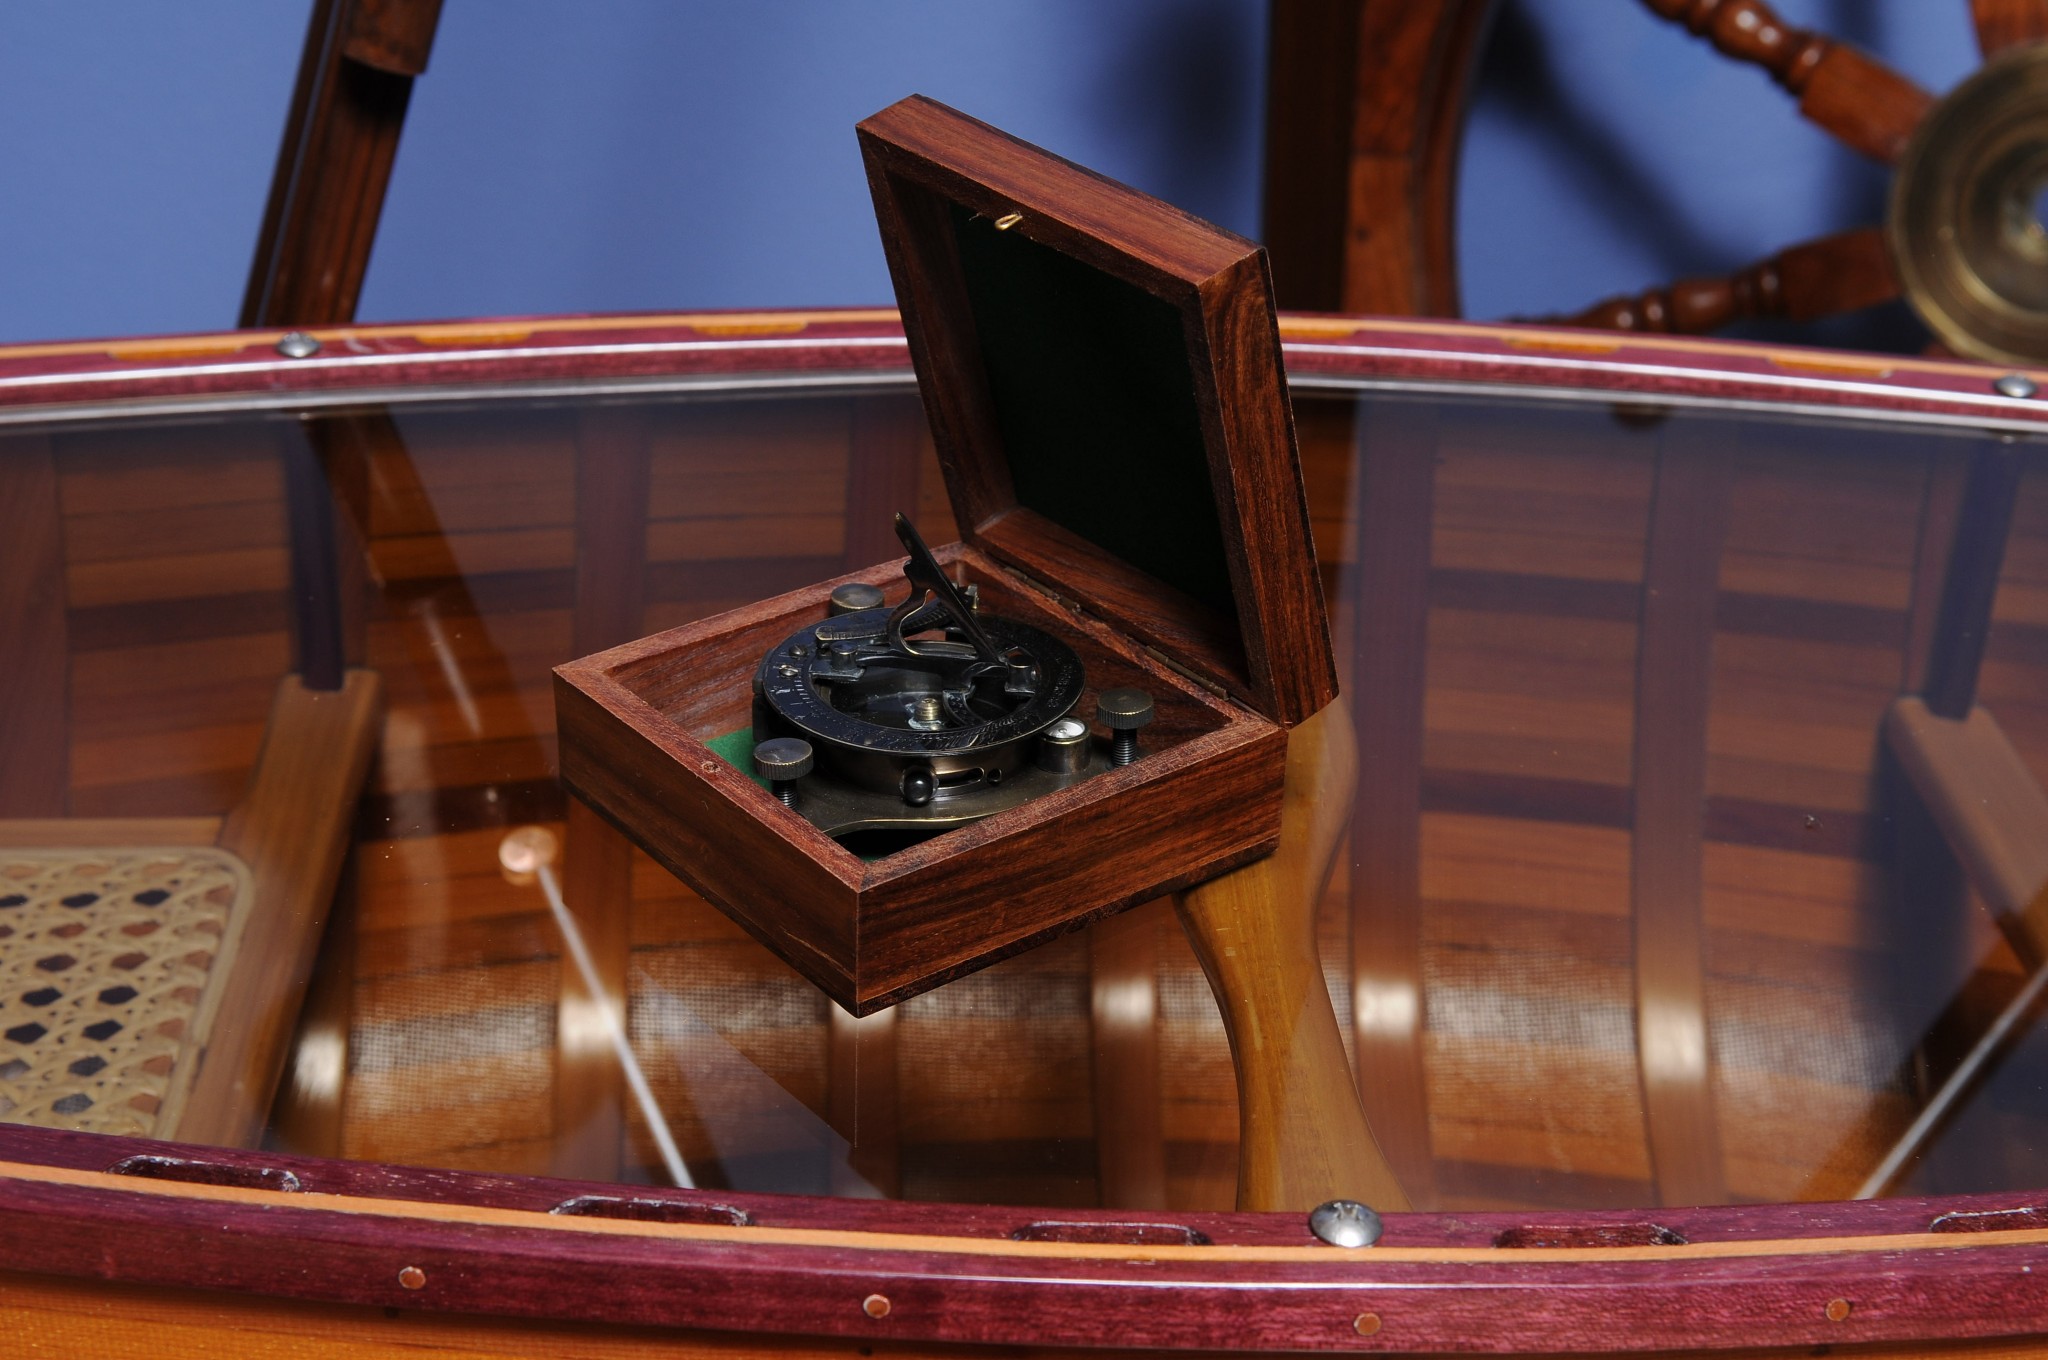 4.5" x 4.5" x 2.5" Sundial Compass in Wood Box - Medium